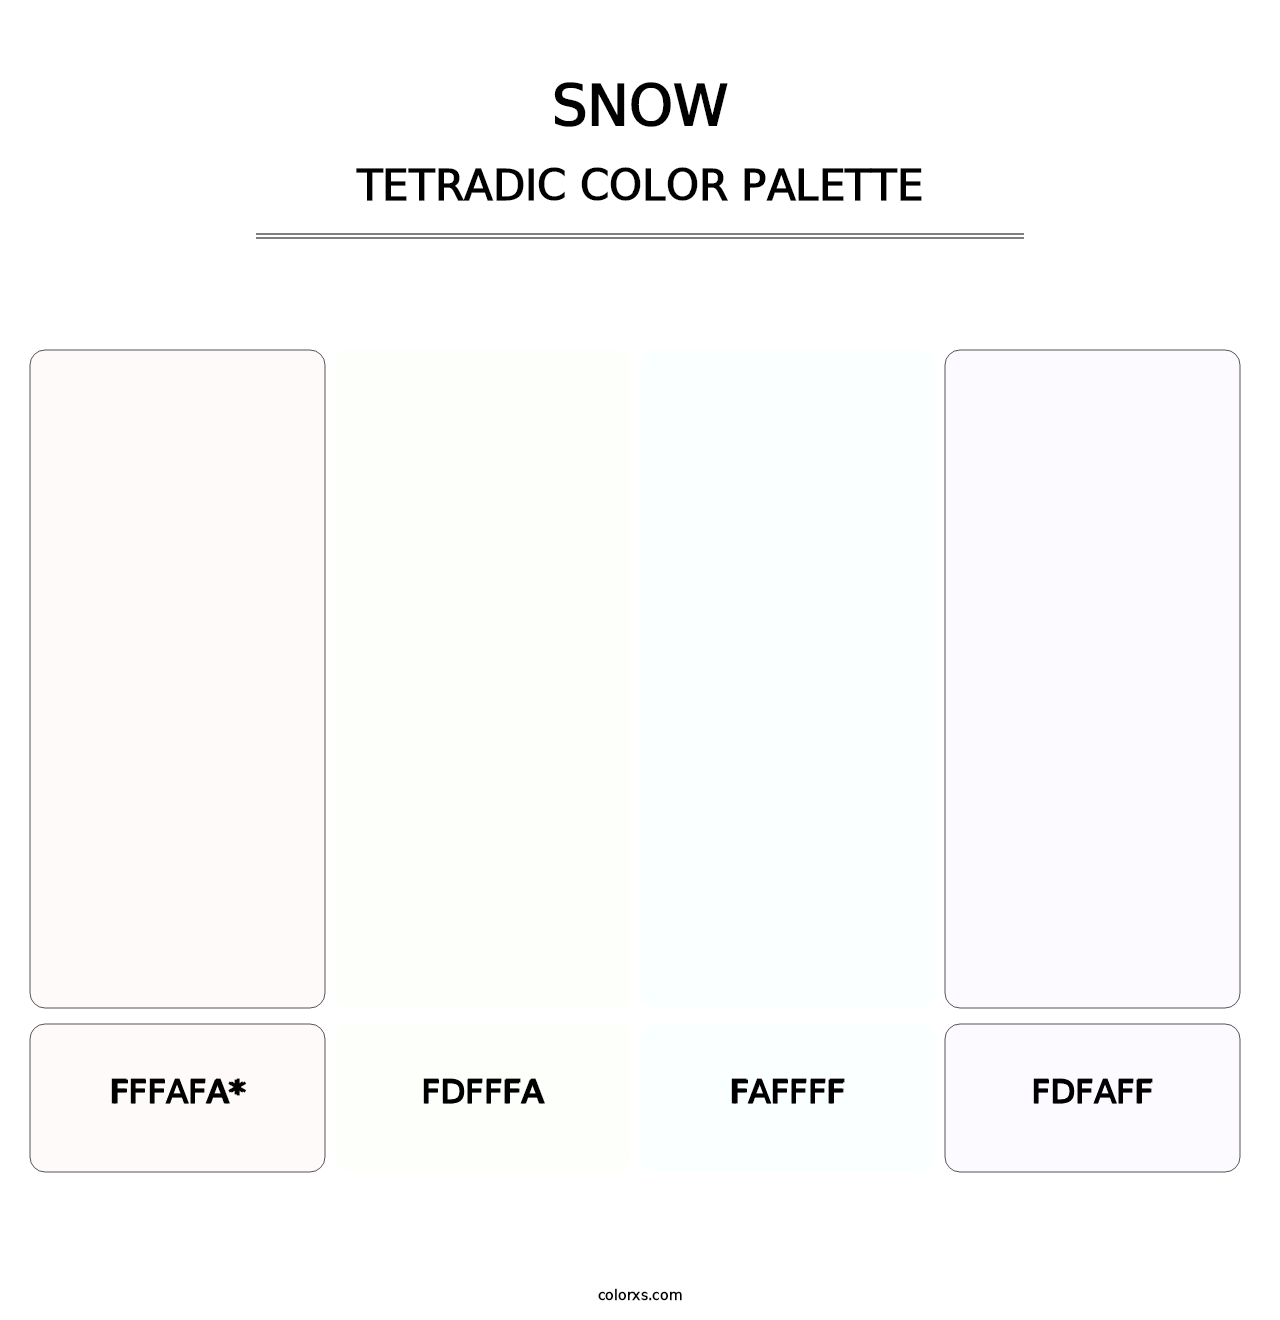 Snow - Tetradic Color Palette